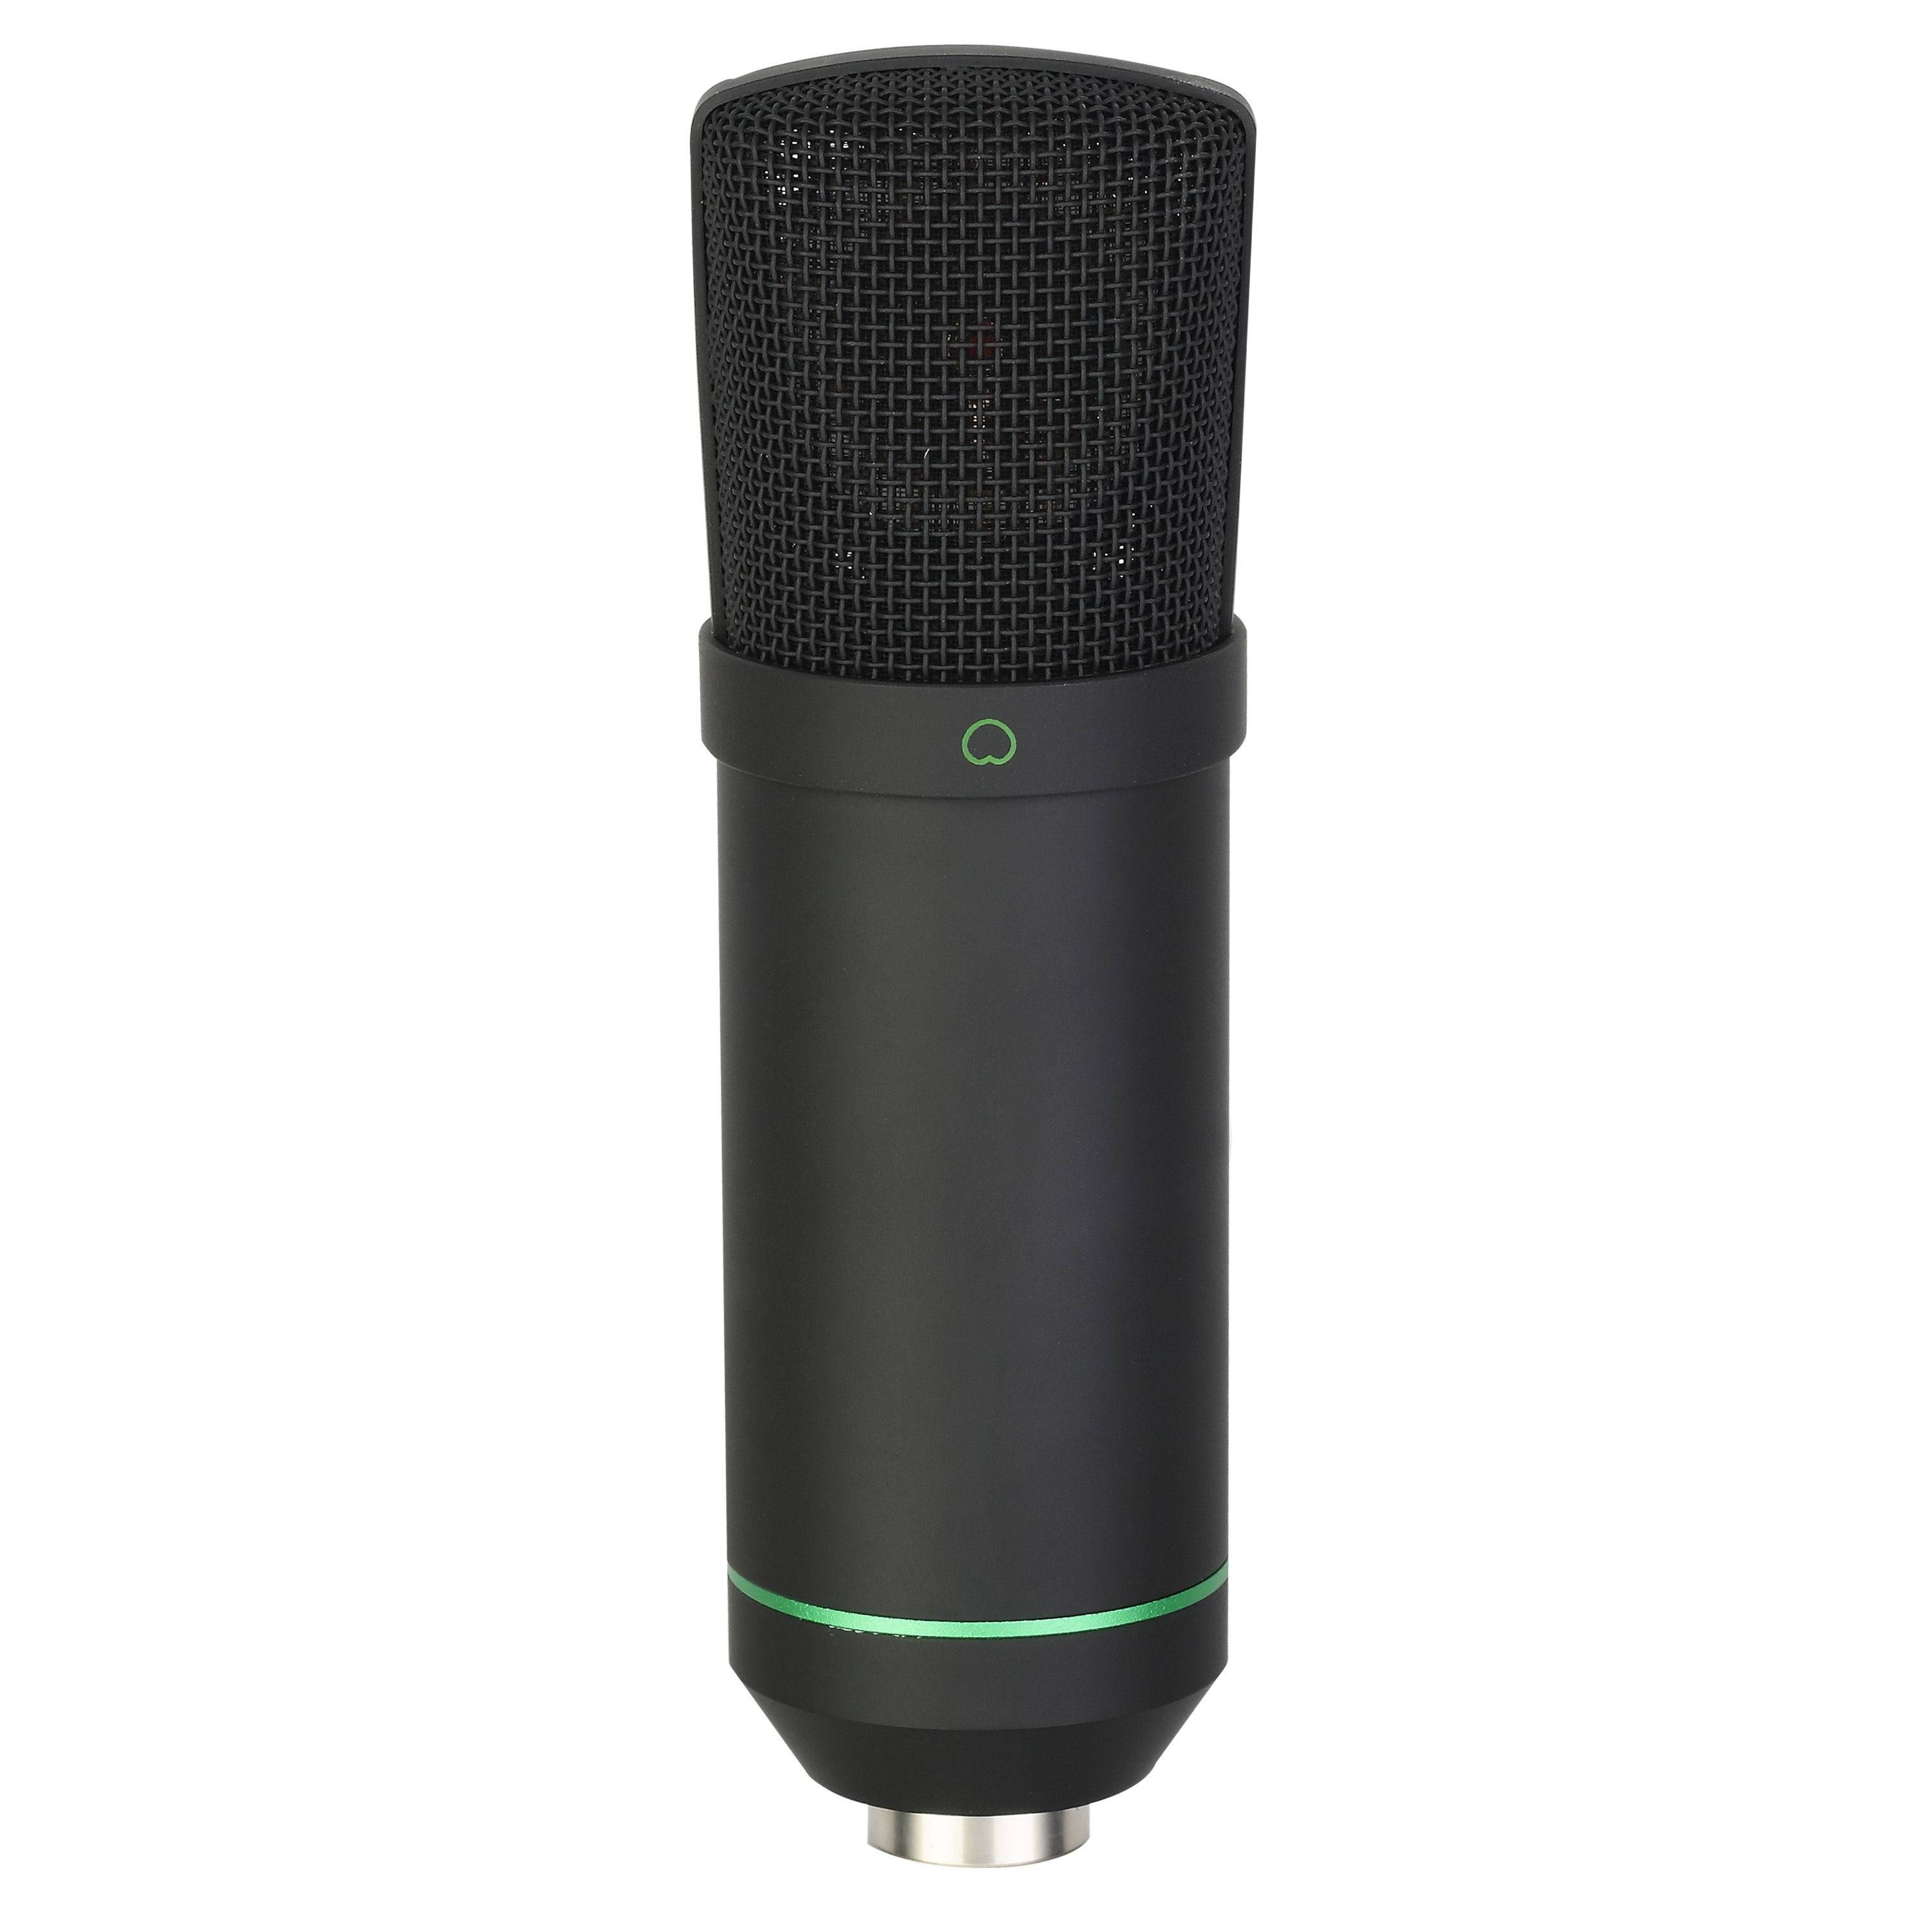 USM004 φ14mm high quality condenser capsule Uni-directional AD Conversion Professional USB Studio Microphones